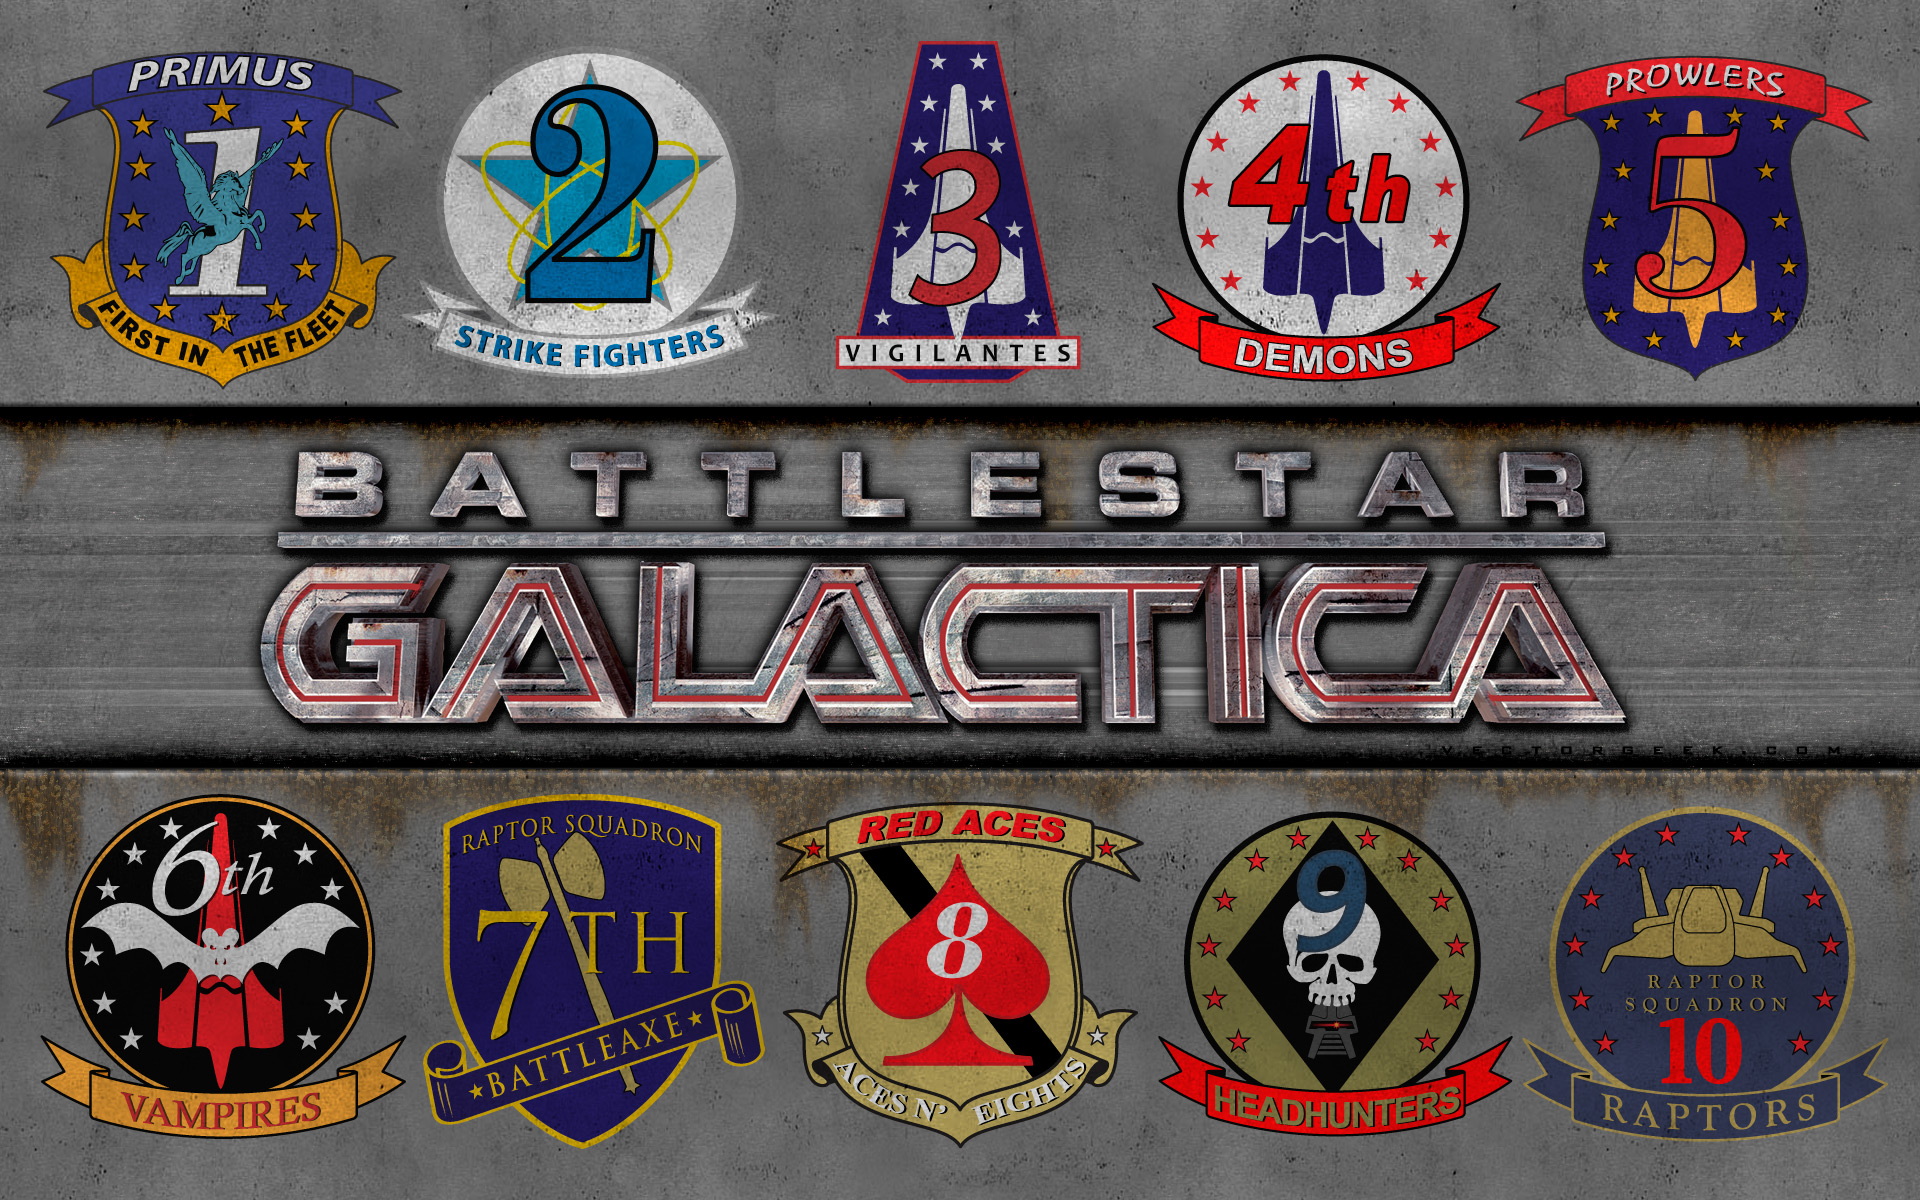 Battlestar Galactica Squadron